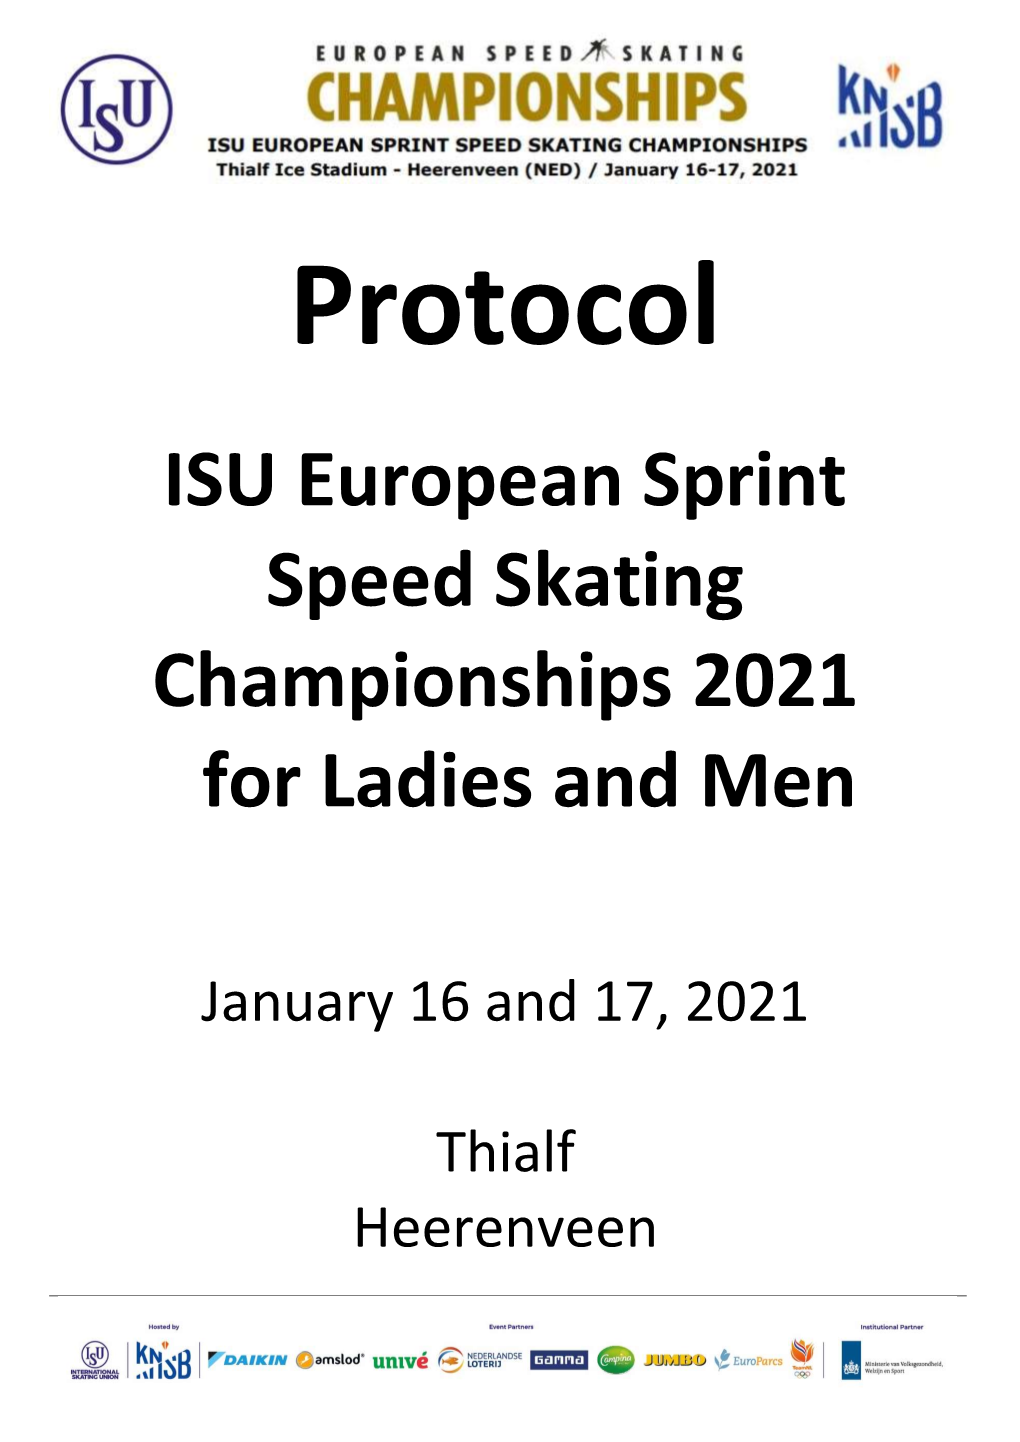 ISU European Sprint Speed Skating Championships 2021 for Ladies and Men